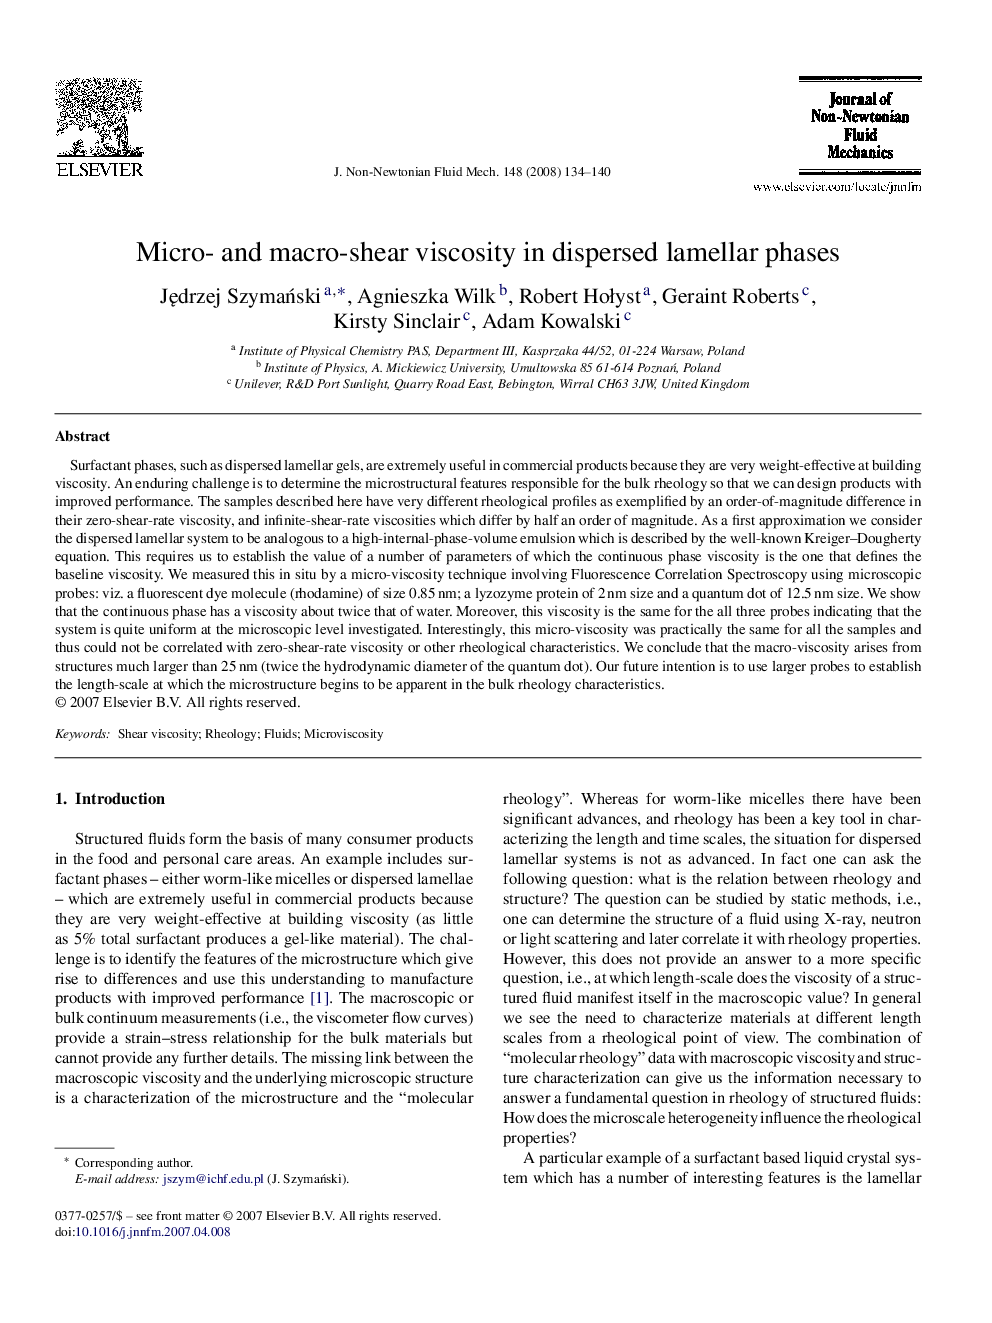 Micro- and macro-shear viscosity in dispersed lamellar phases